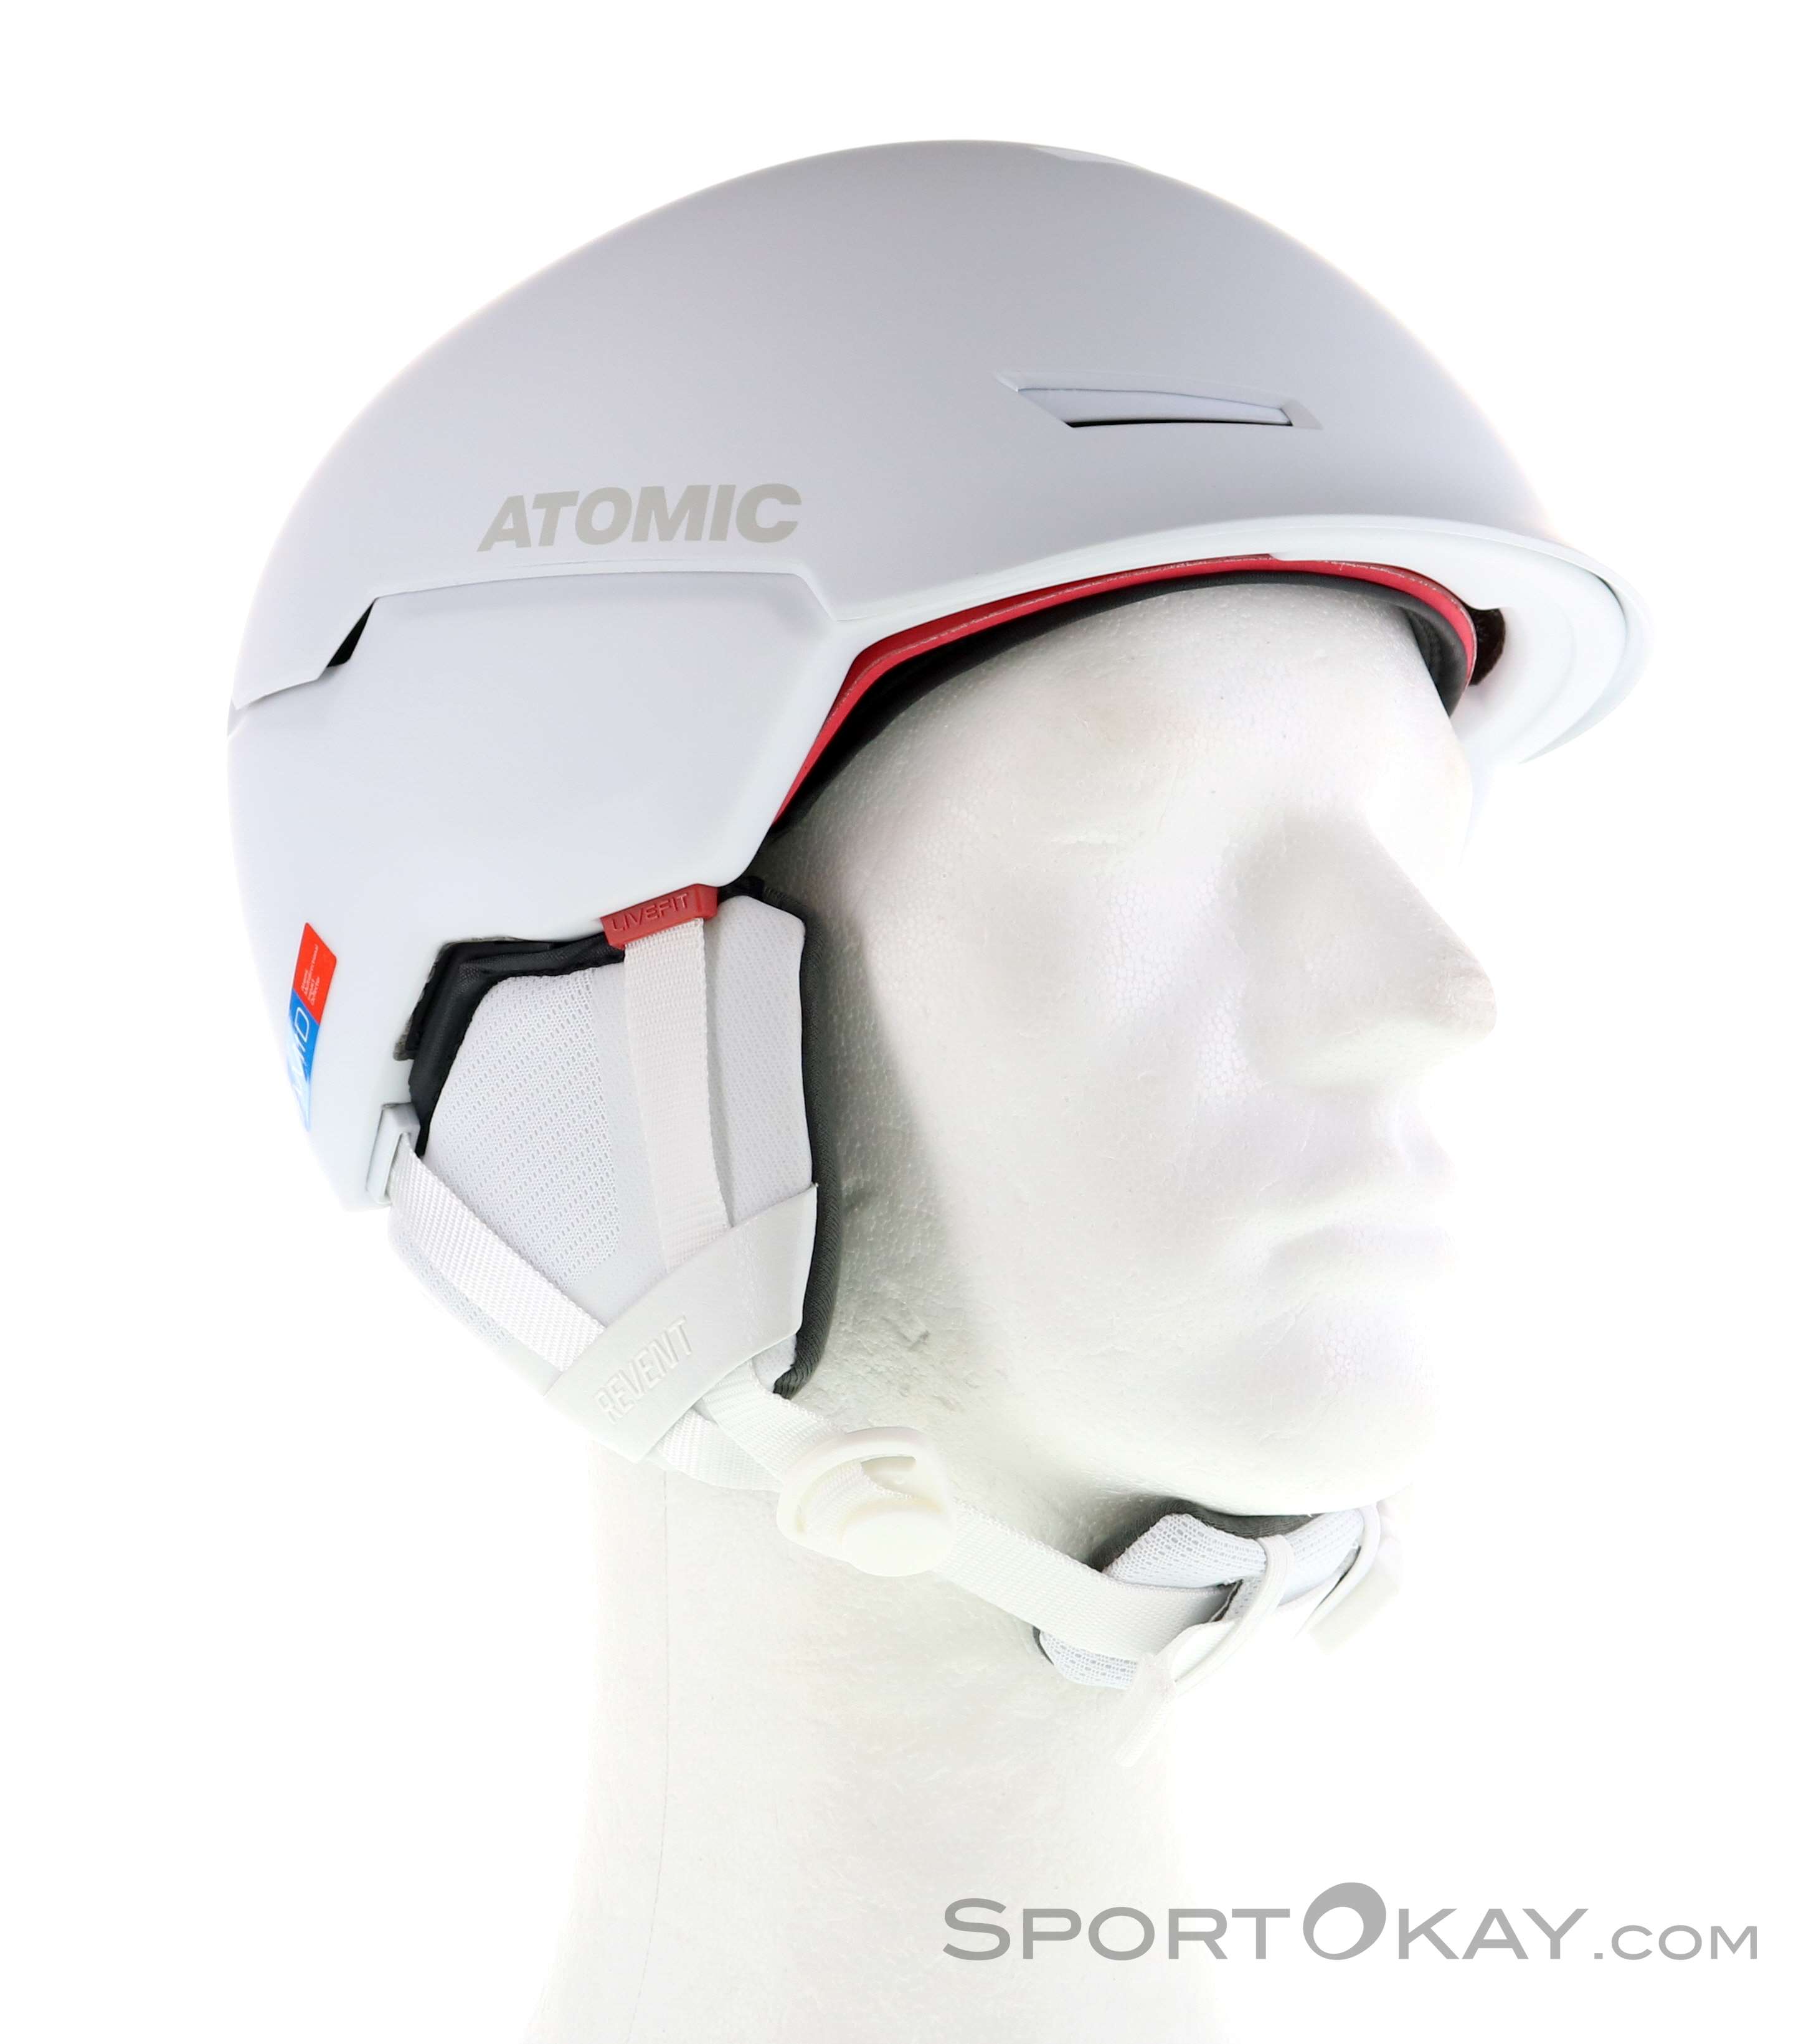 Size L Revent+ AMID AN5005624L 59-63 cm Atomic All-Mountain Unisex Ski Helmet Red 